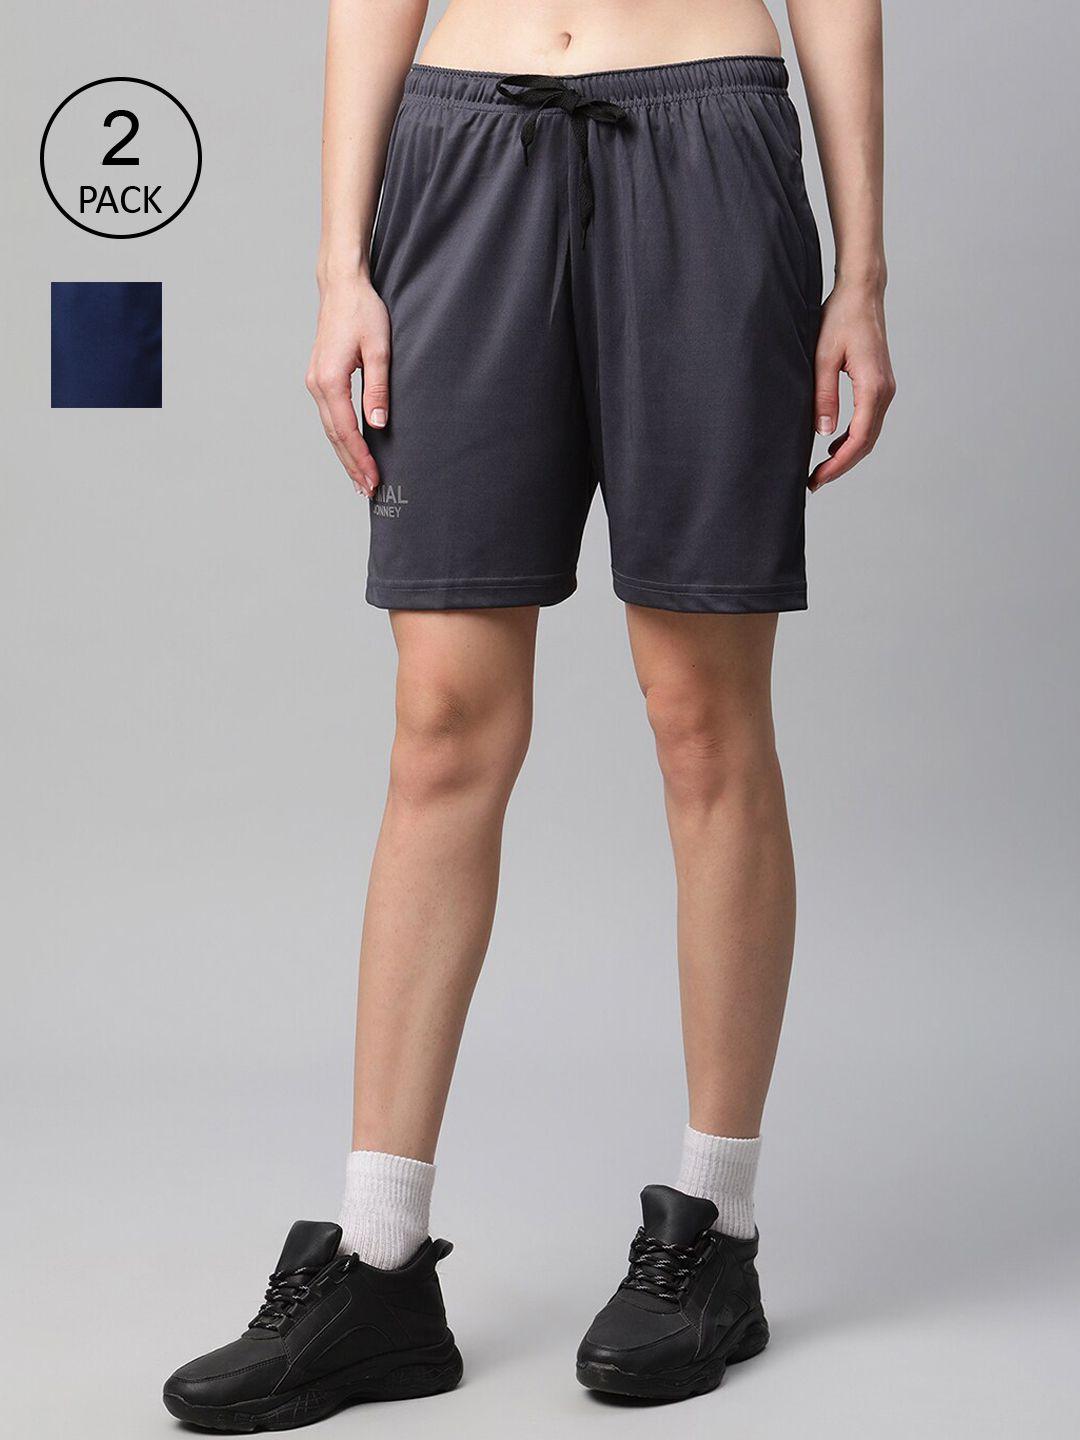 vimal jonney women blue & grey set of 2 sports shorts